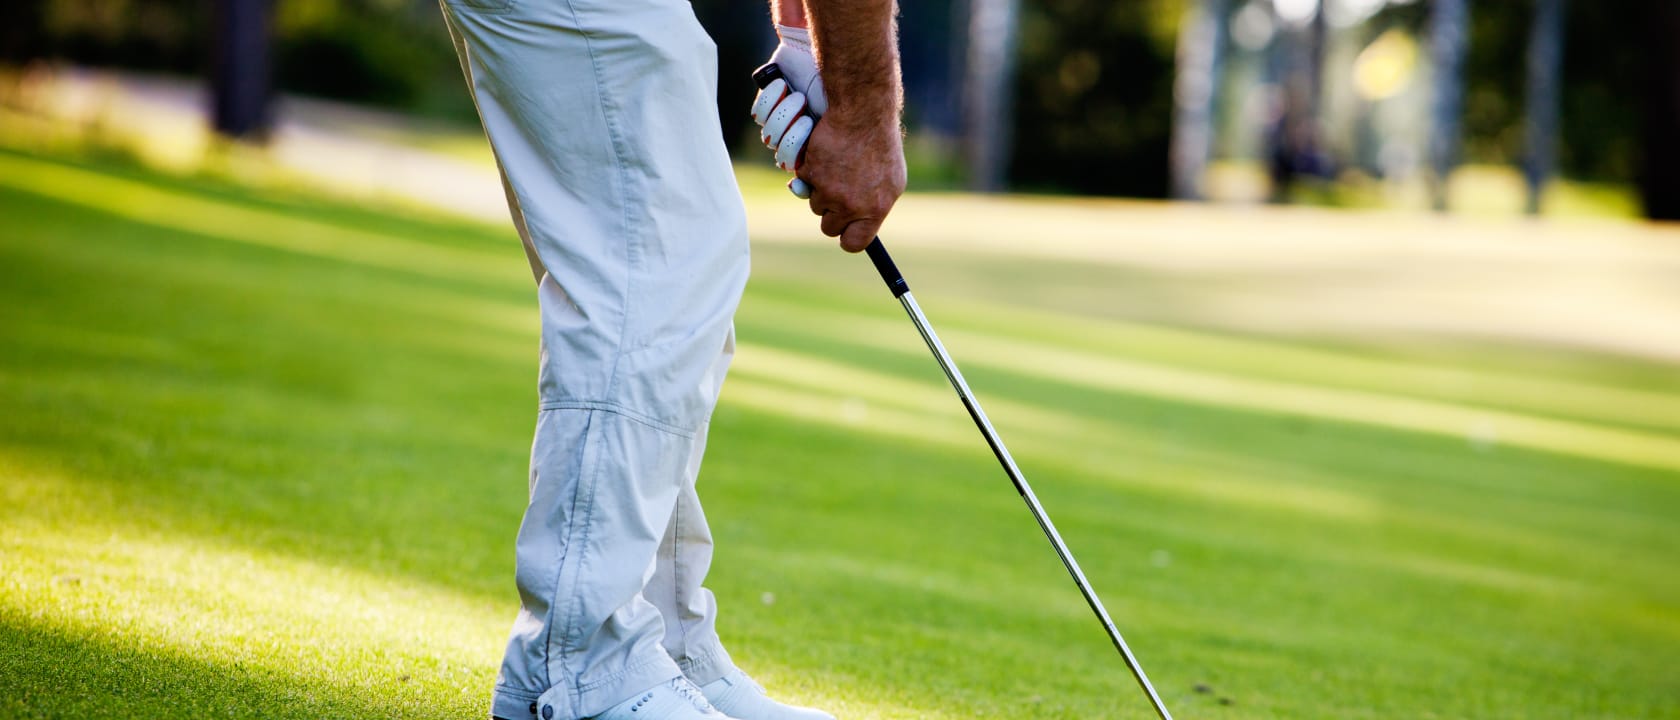 Masters Golf Tournament Hospitality